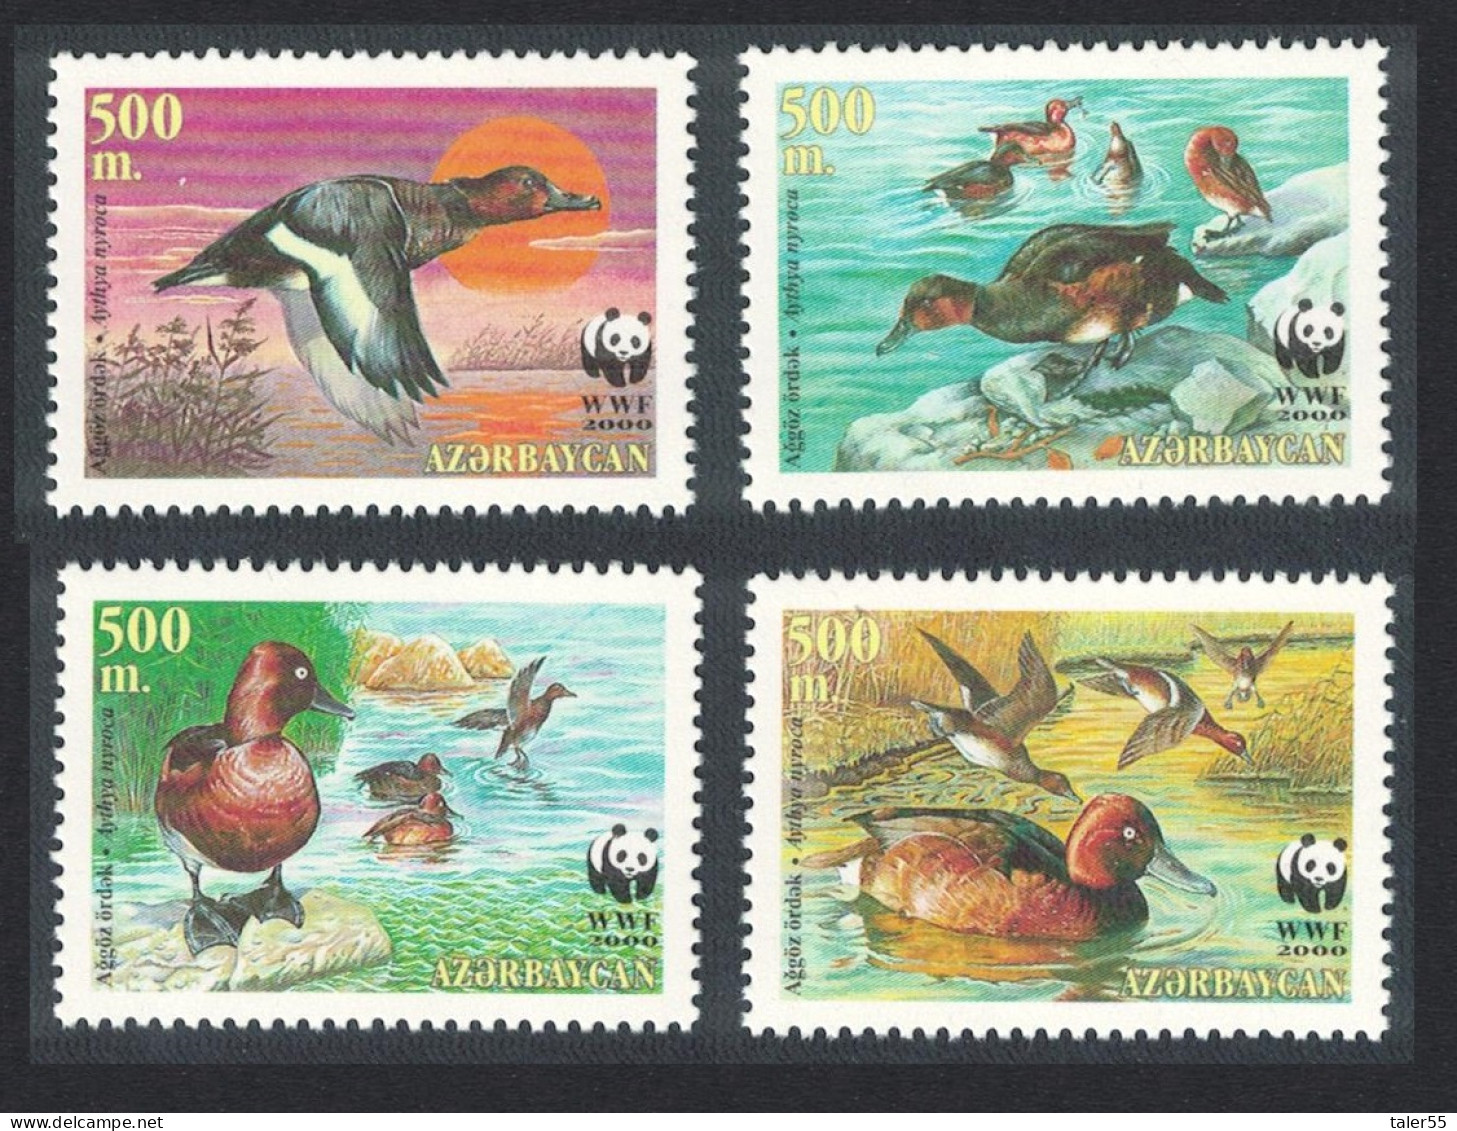 Azerbaijan WWF Birds Ferruginous Duck 4v 2000 MNH SG#480-483 MI#474-477 Sc#704 A-d - Azerbaïdjan